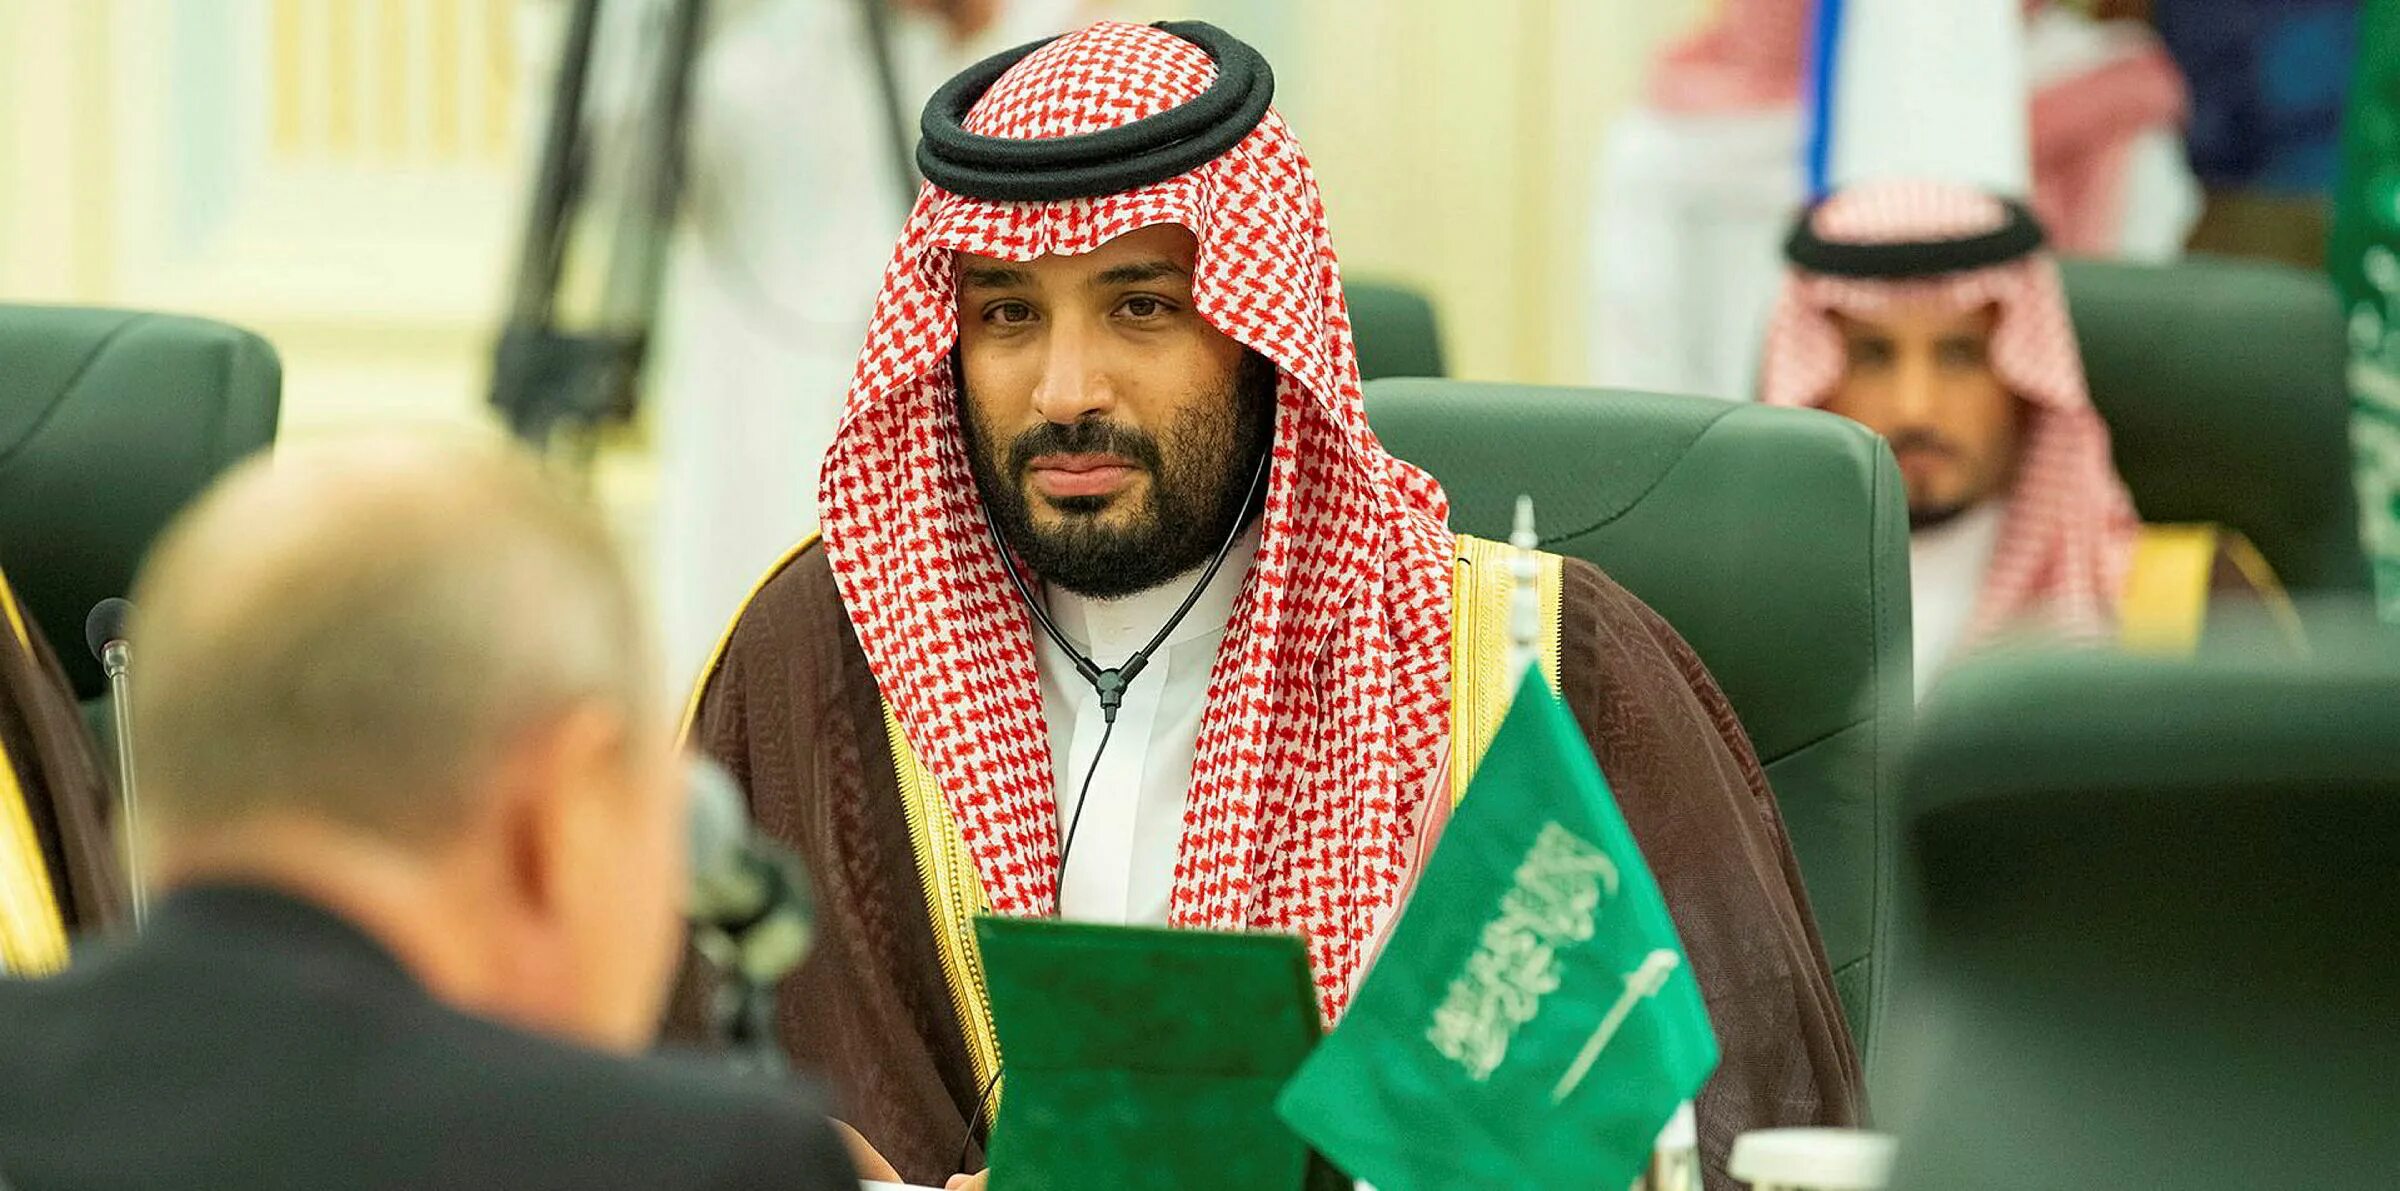 Мухаммед ибн Салман Аль Сауд. Саудовский принц Мухаммед Бен Салман. Наследный принц Мухаммед Бин Салман. Принц Саудовской Аравии Мухаммед. Имена саудовской аравии